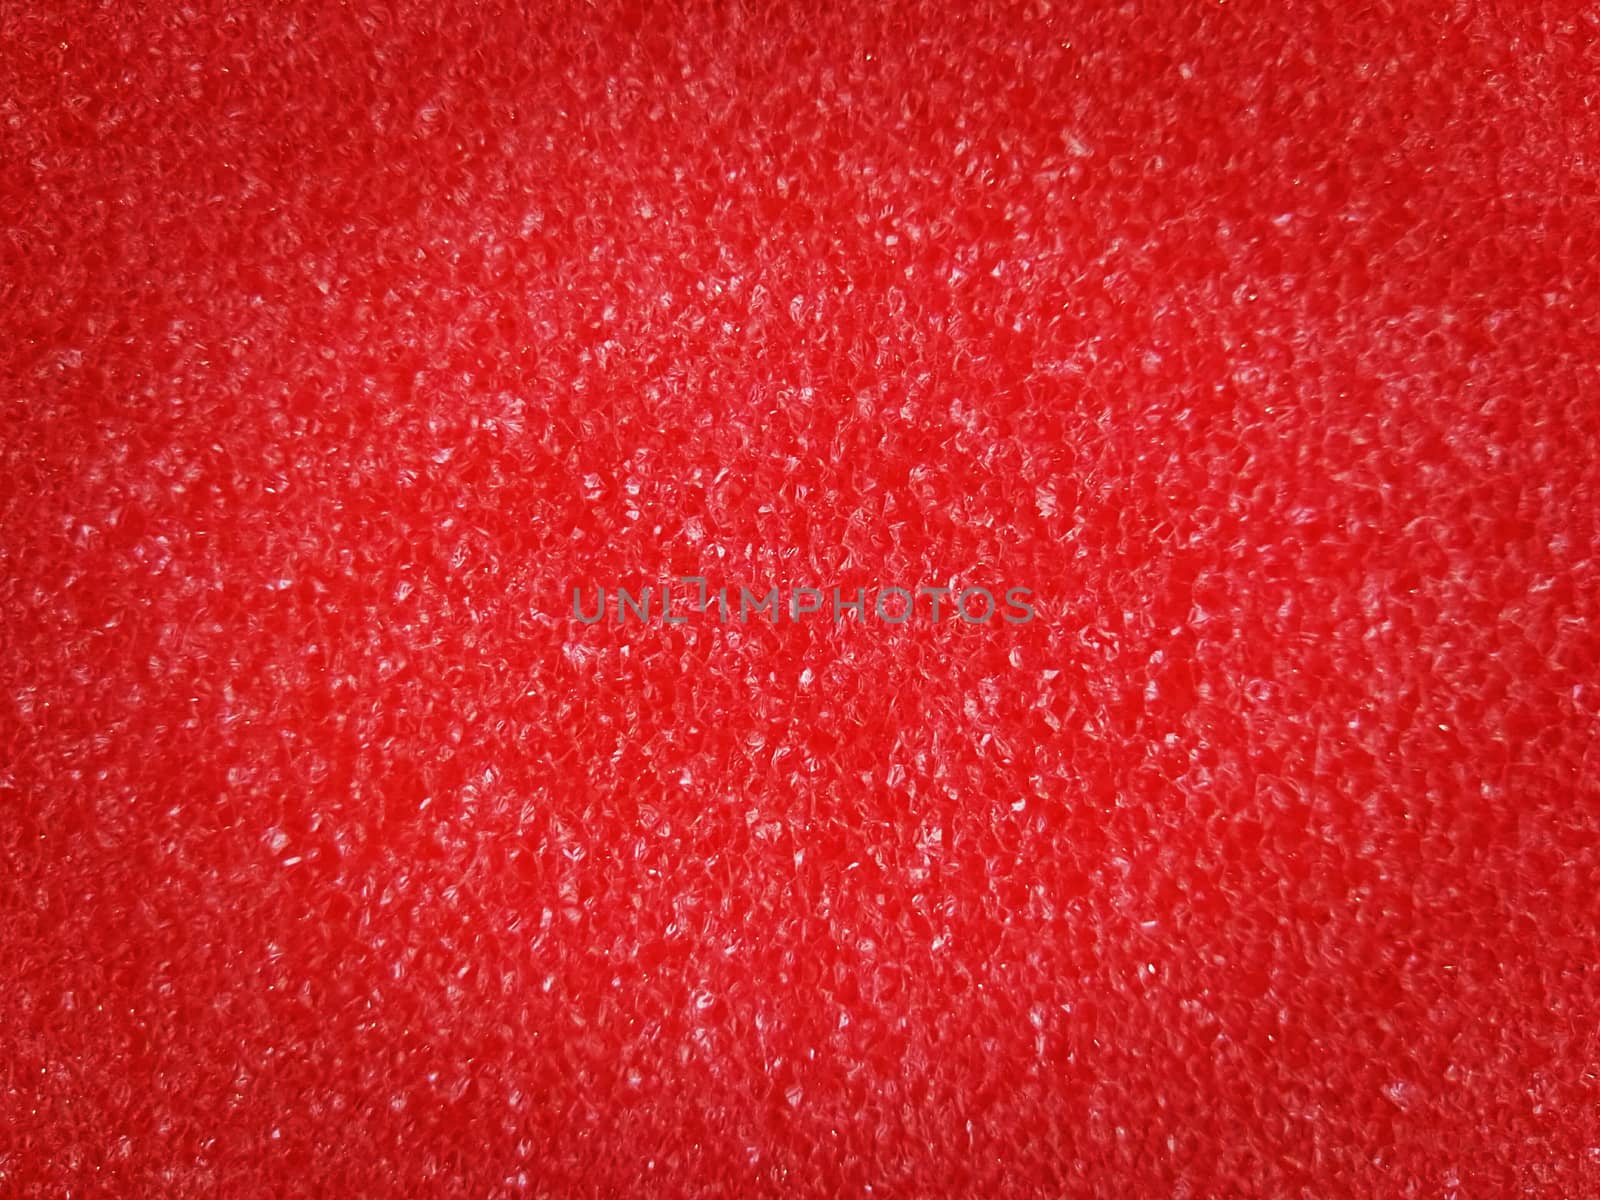 Red foam sponge texture background by wattanaphob